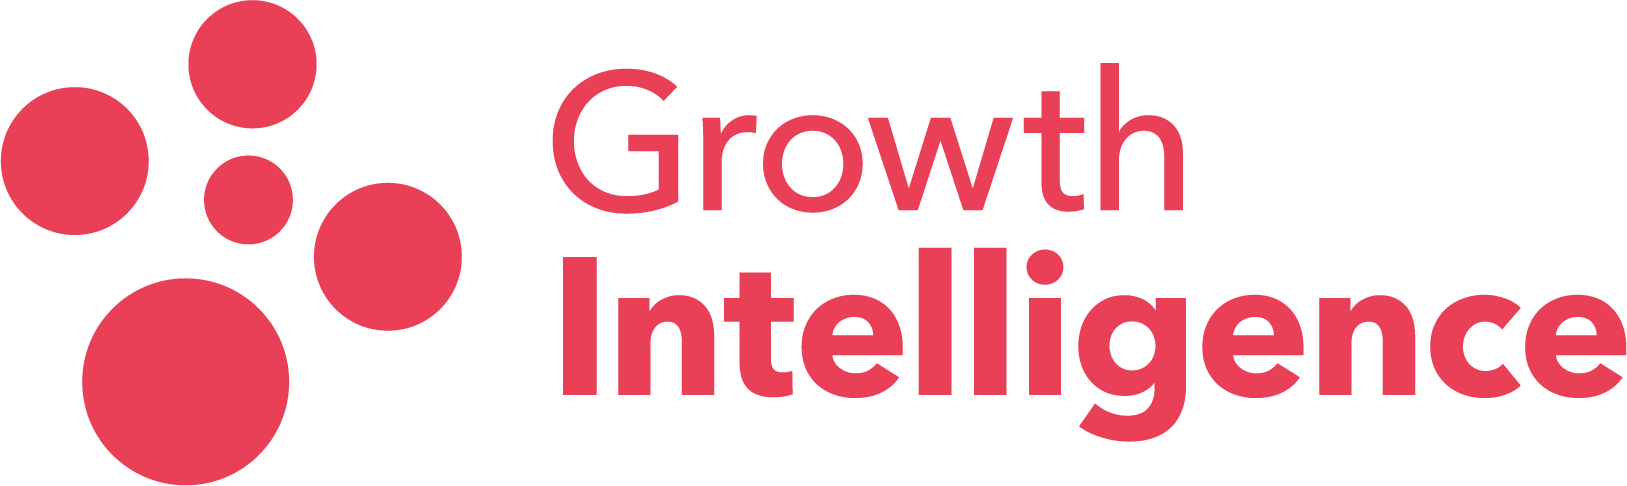 Growth Intelligence